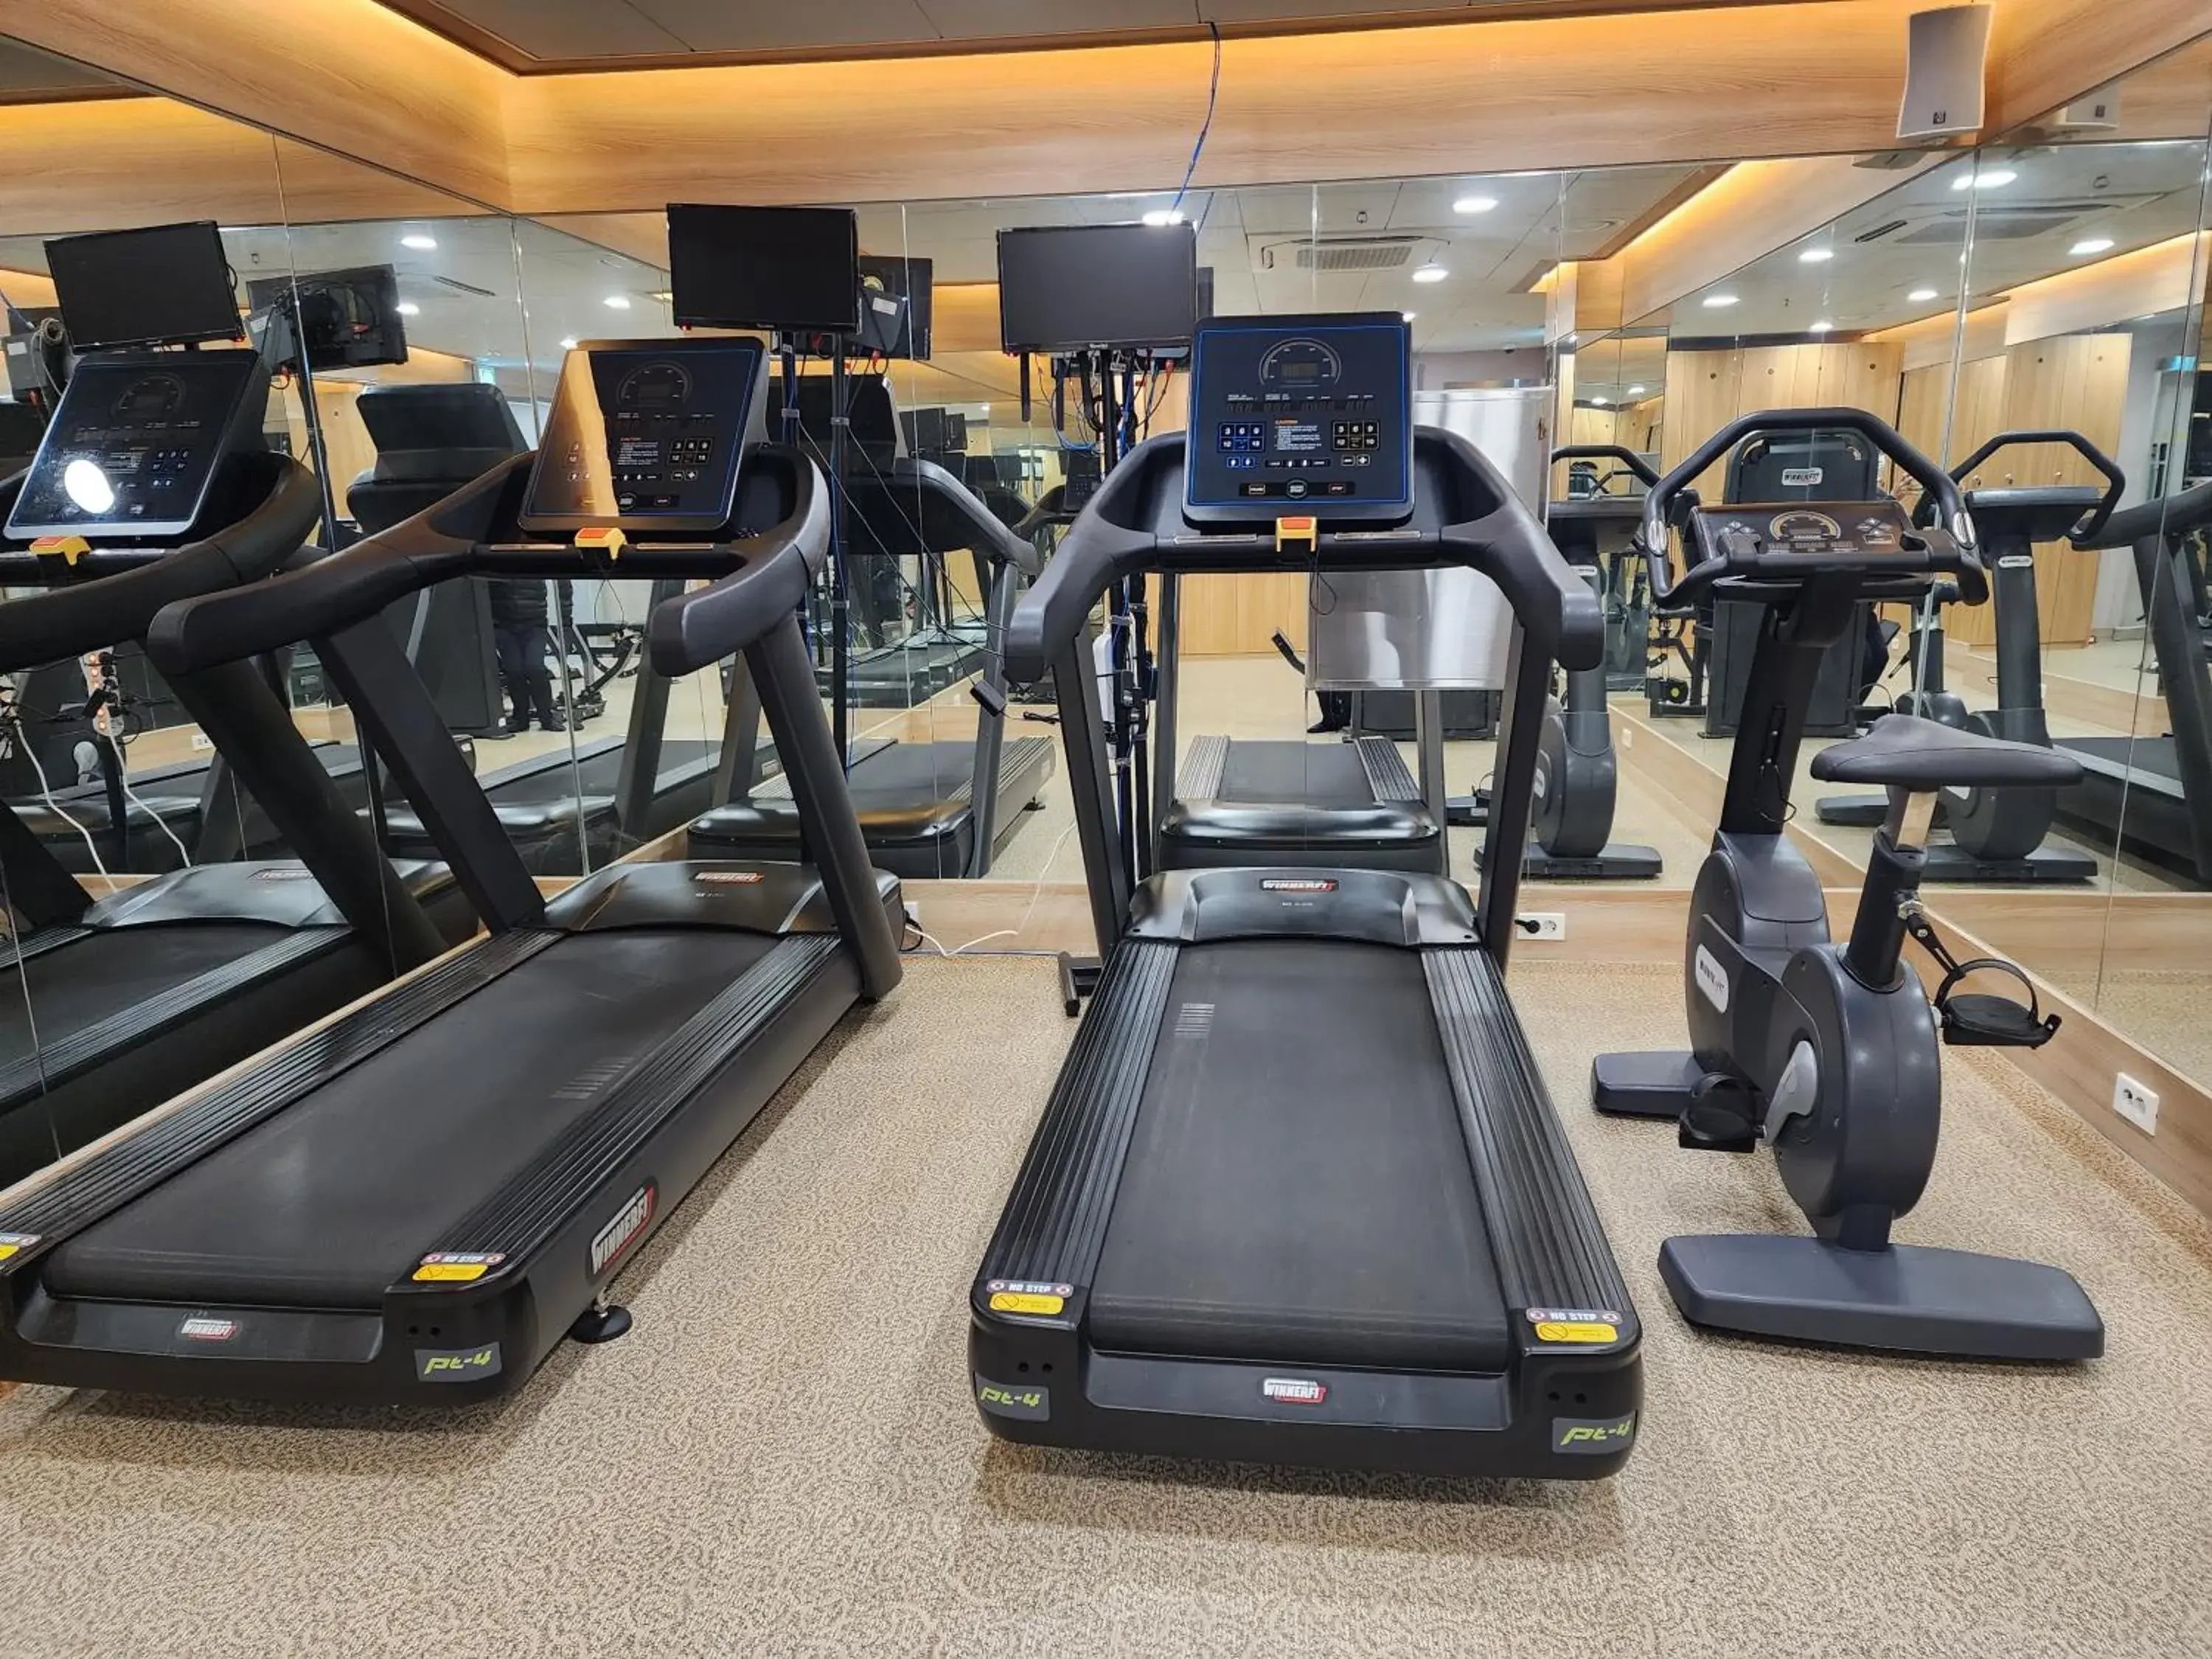 Fitness centre/facilities, Fitness Center/Facilities in Casaloma hotel